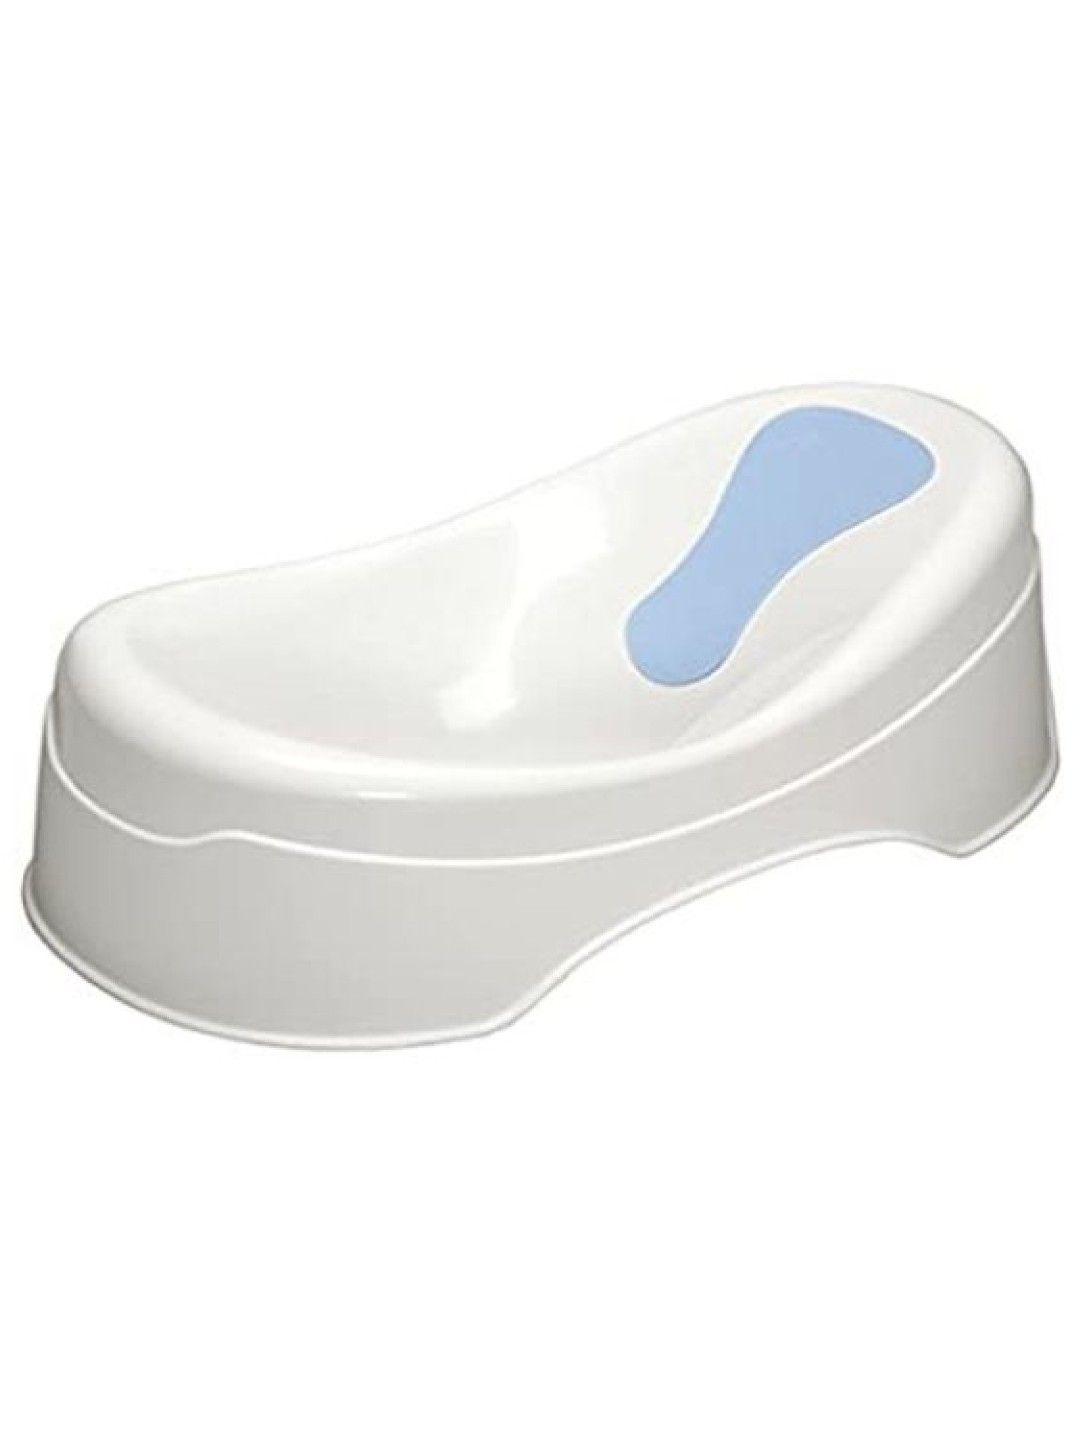 Safety 1st Contoured Cared Infant Bath Tub (No Color- Image 2)